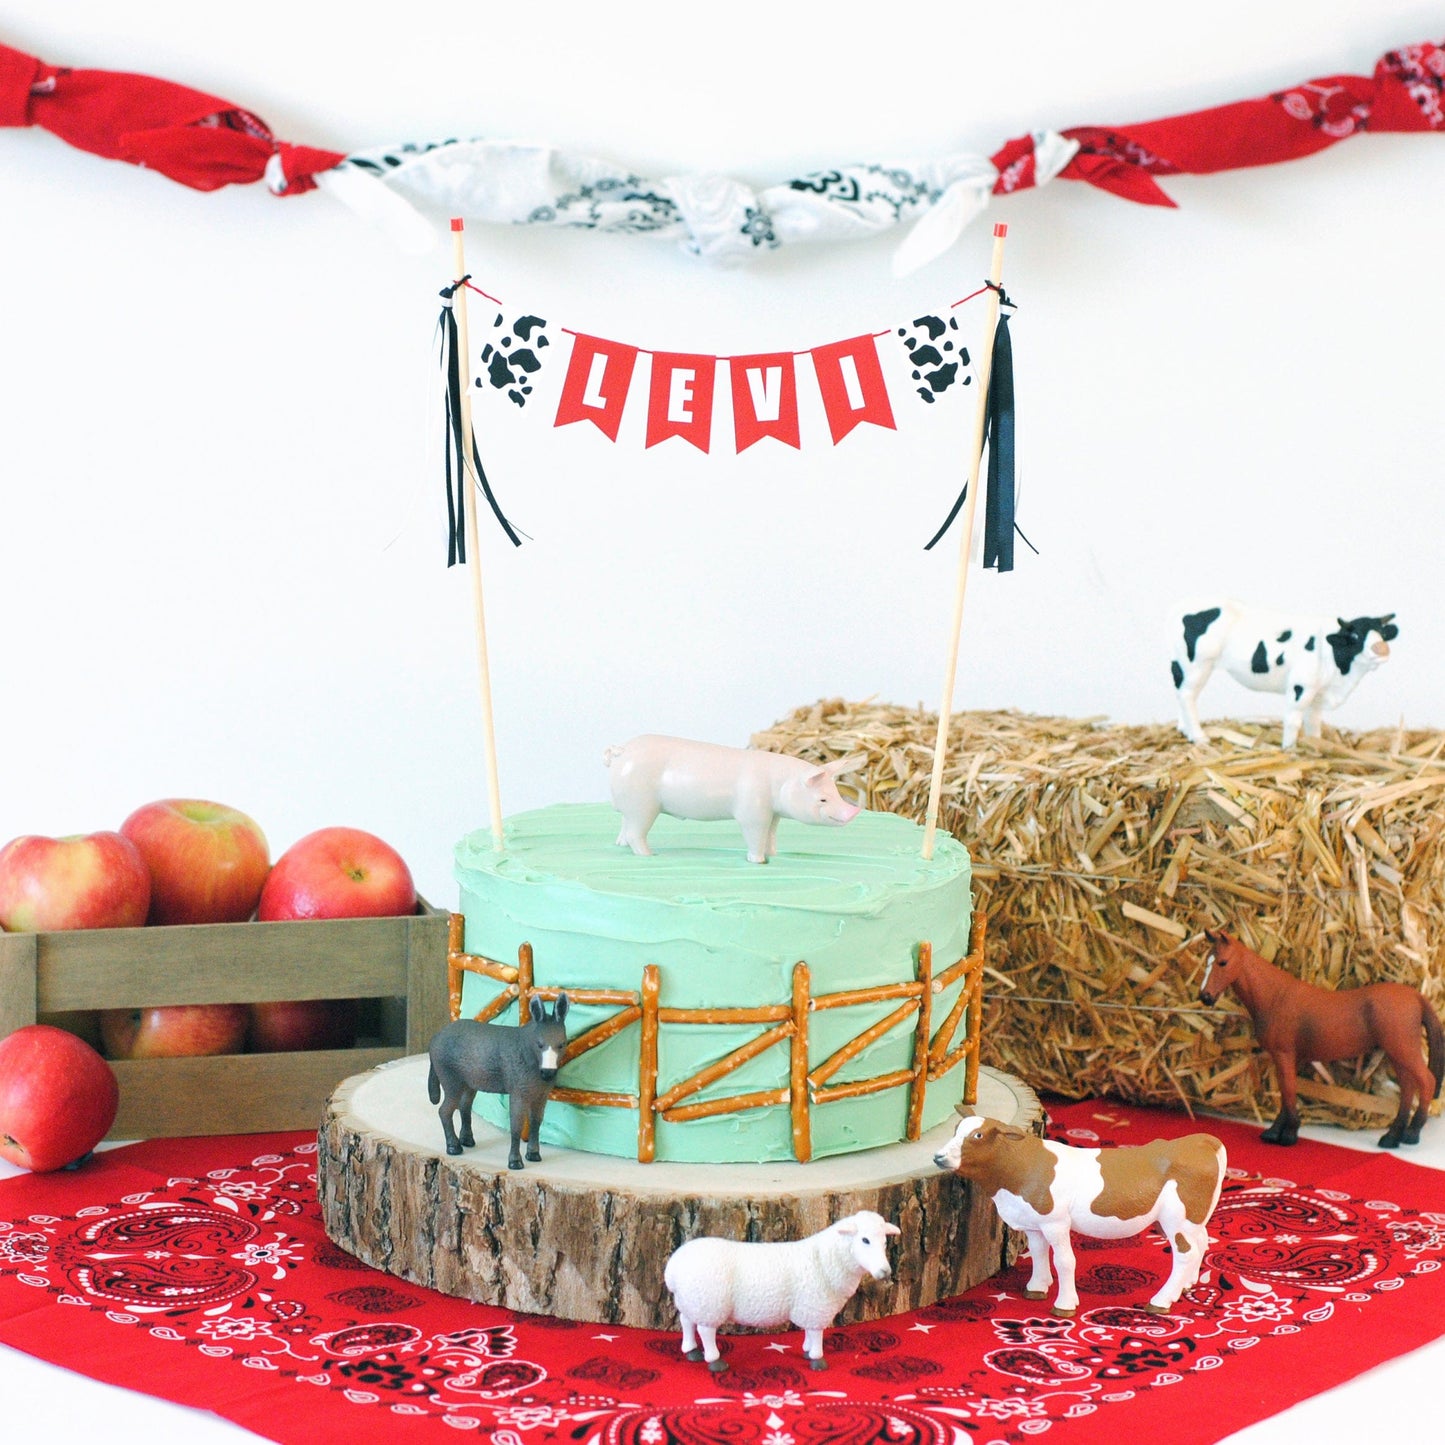 Farm Birthday Cake Topper  Cake Toppers by Avalon Sunshine